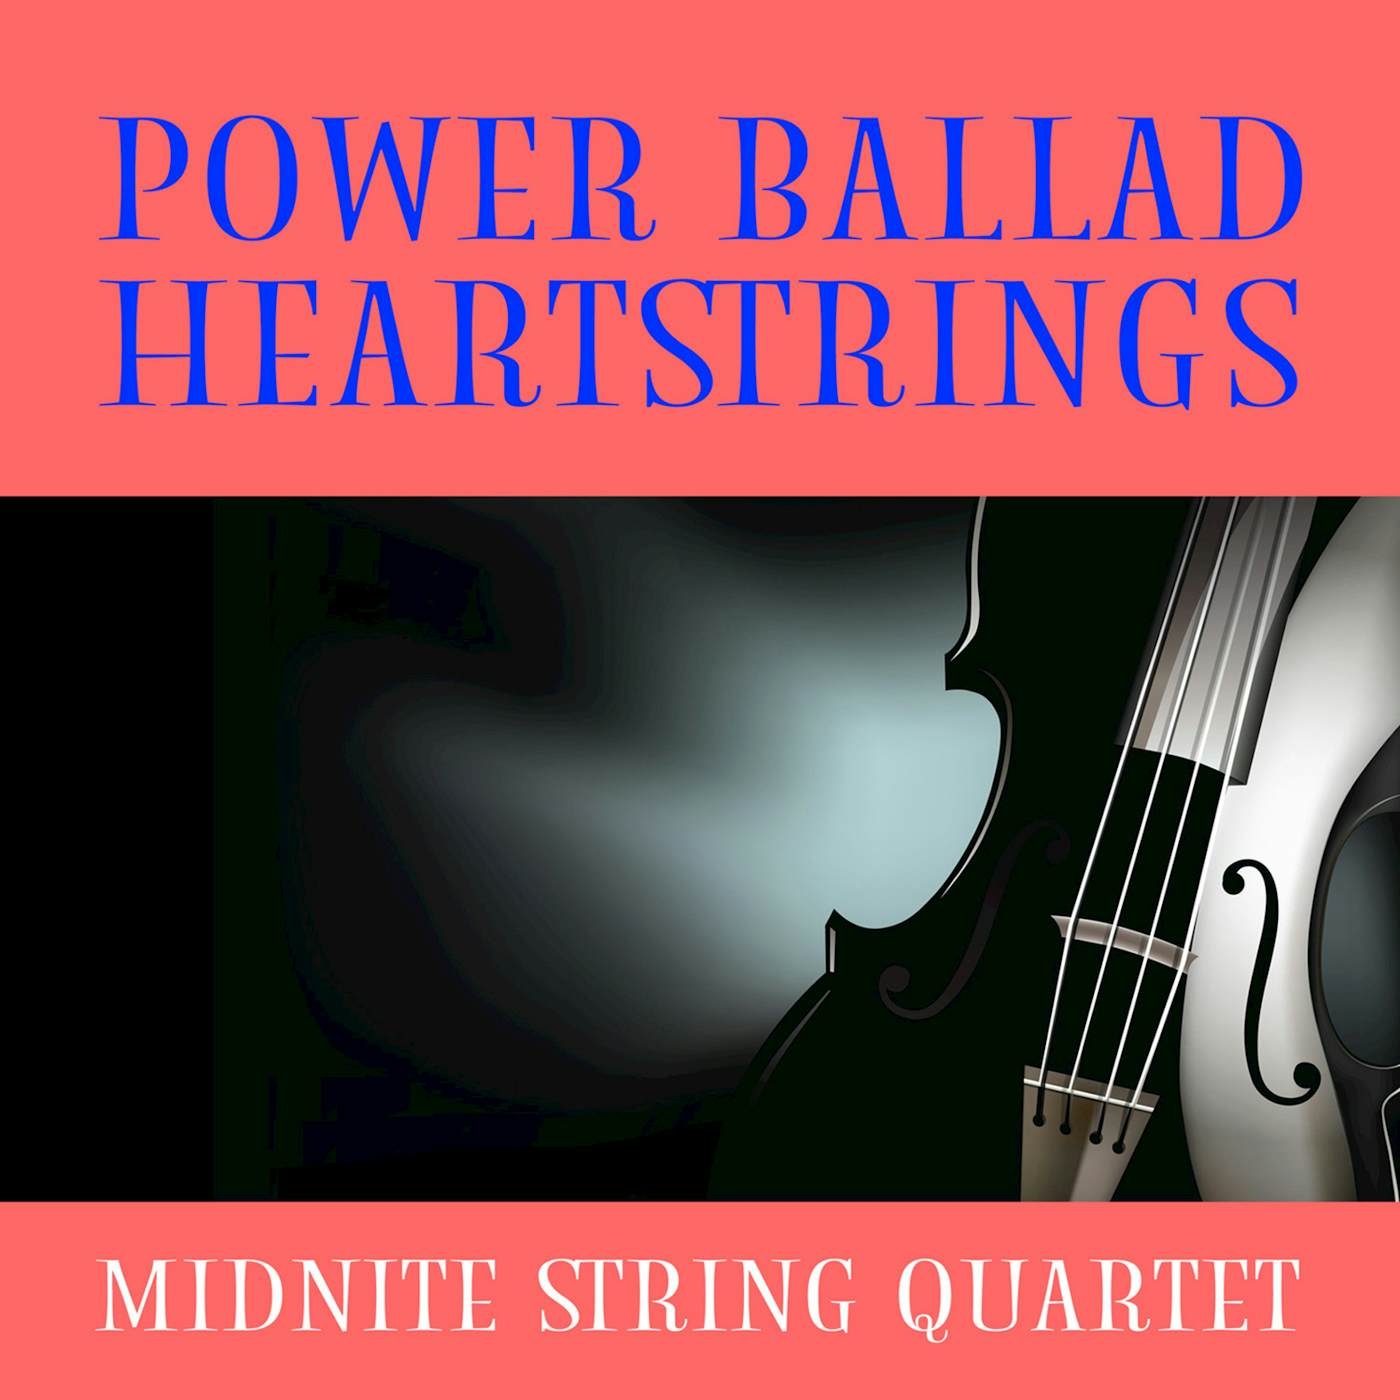 Midnite String Quartet POWER BALLAD HEARTSTRINGS (MOD) CD